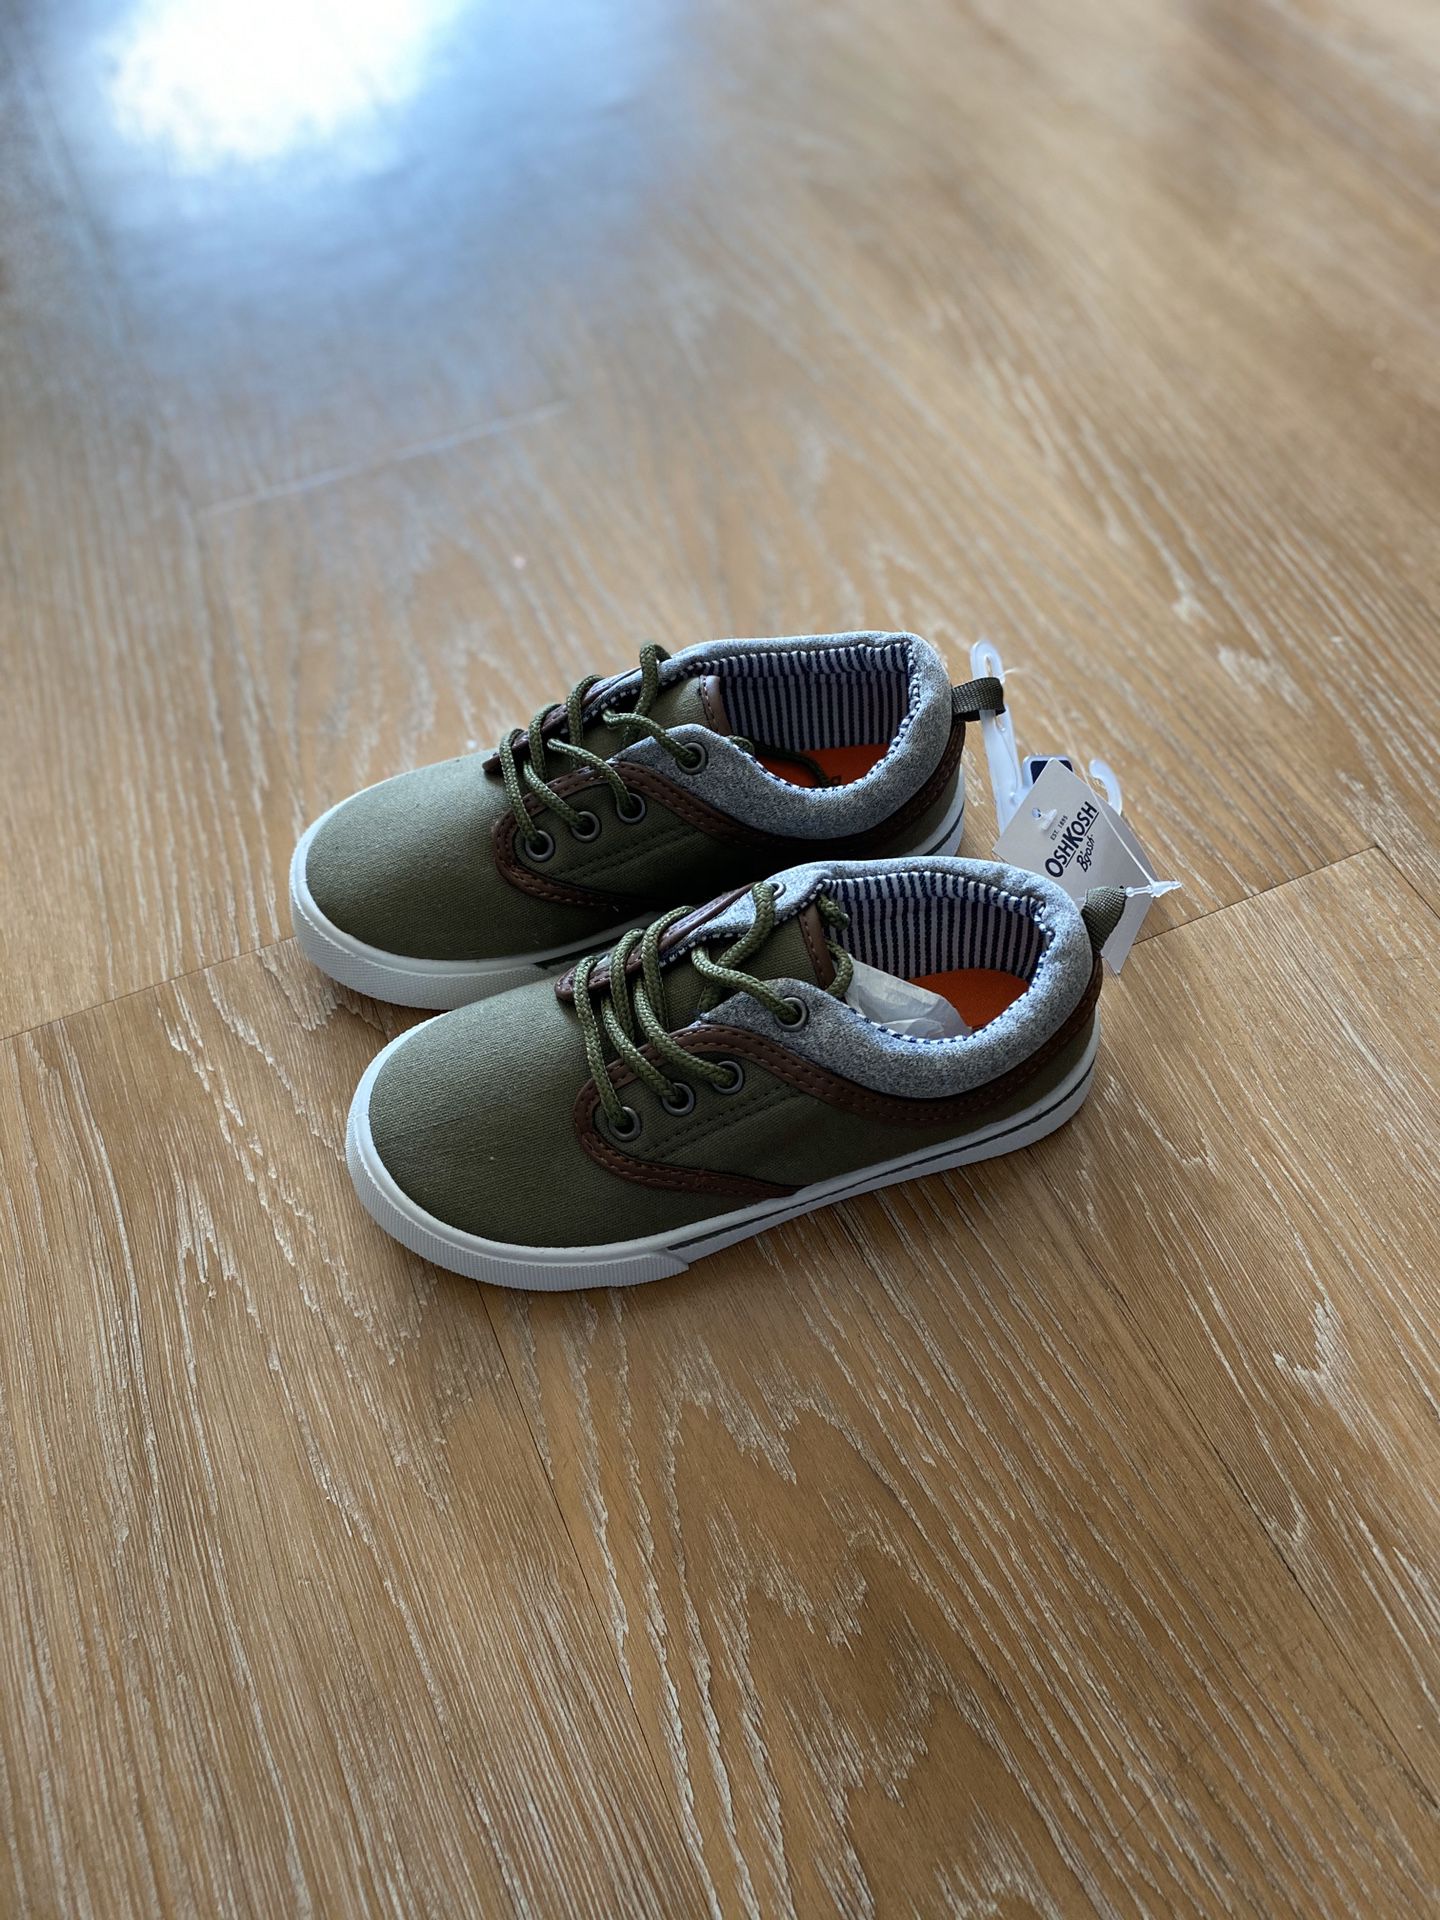 OshKosh- Kids Casual Sneaker - Size 13 - Green/Brown